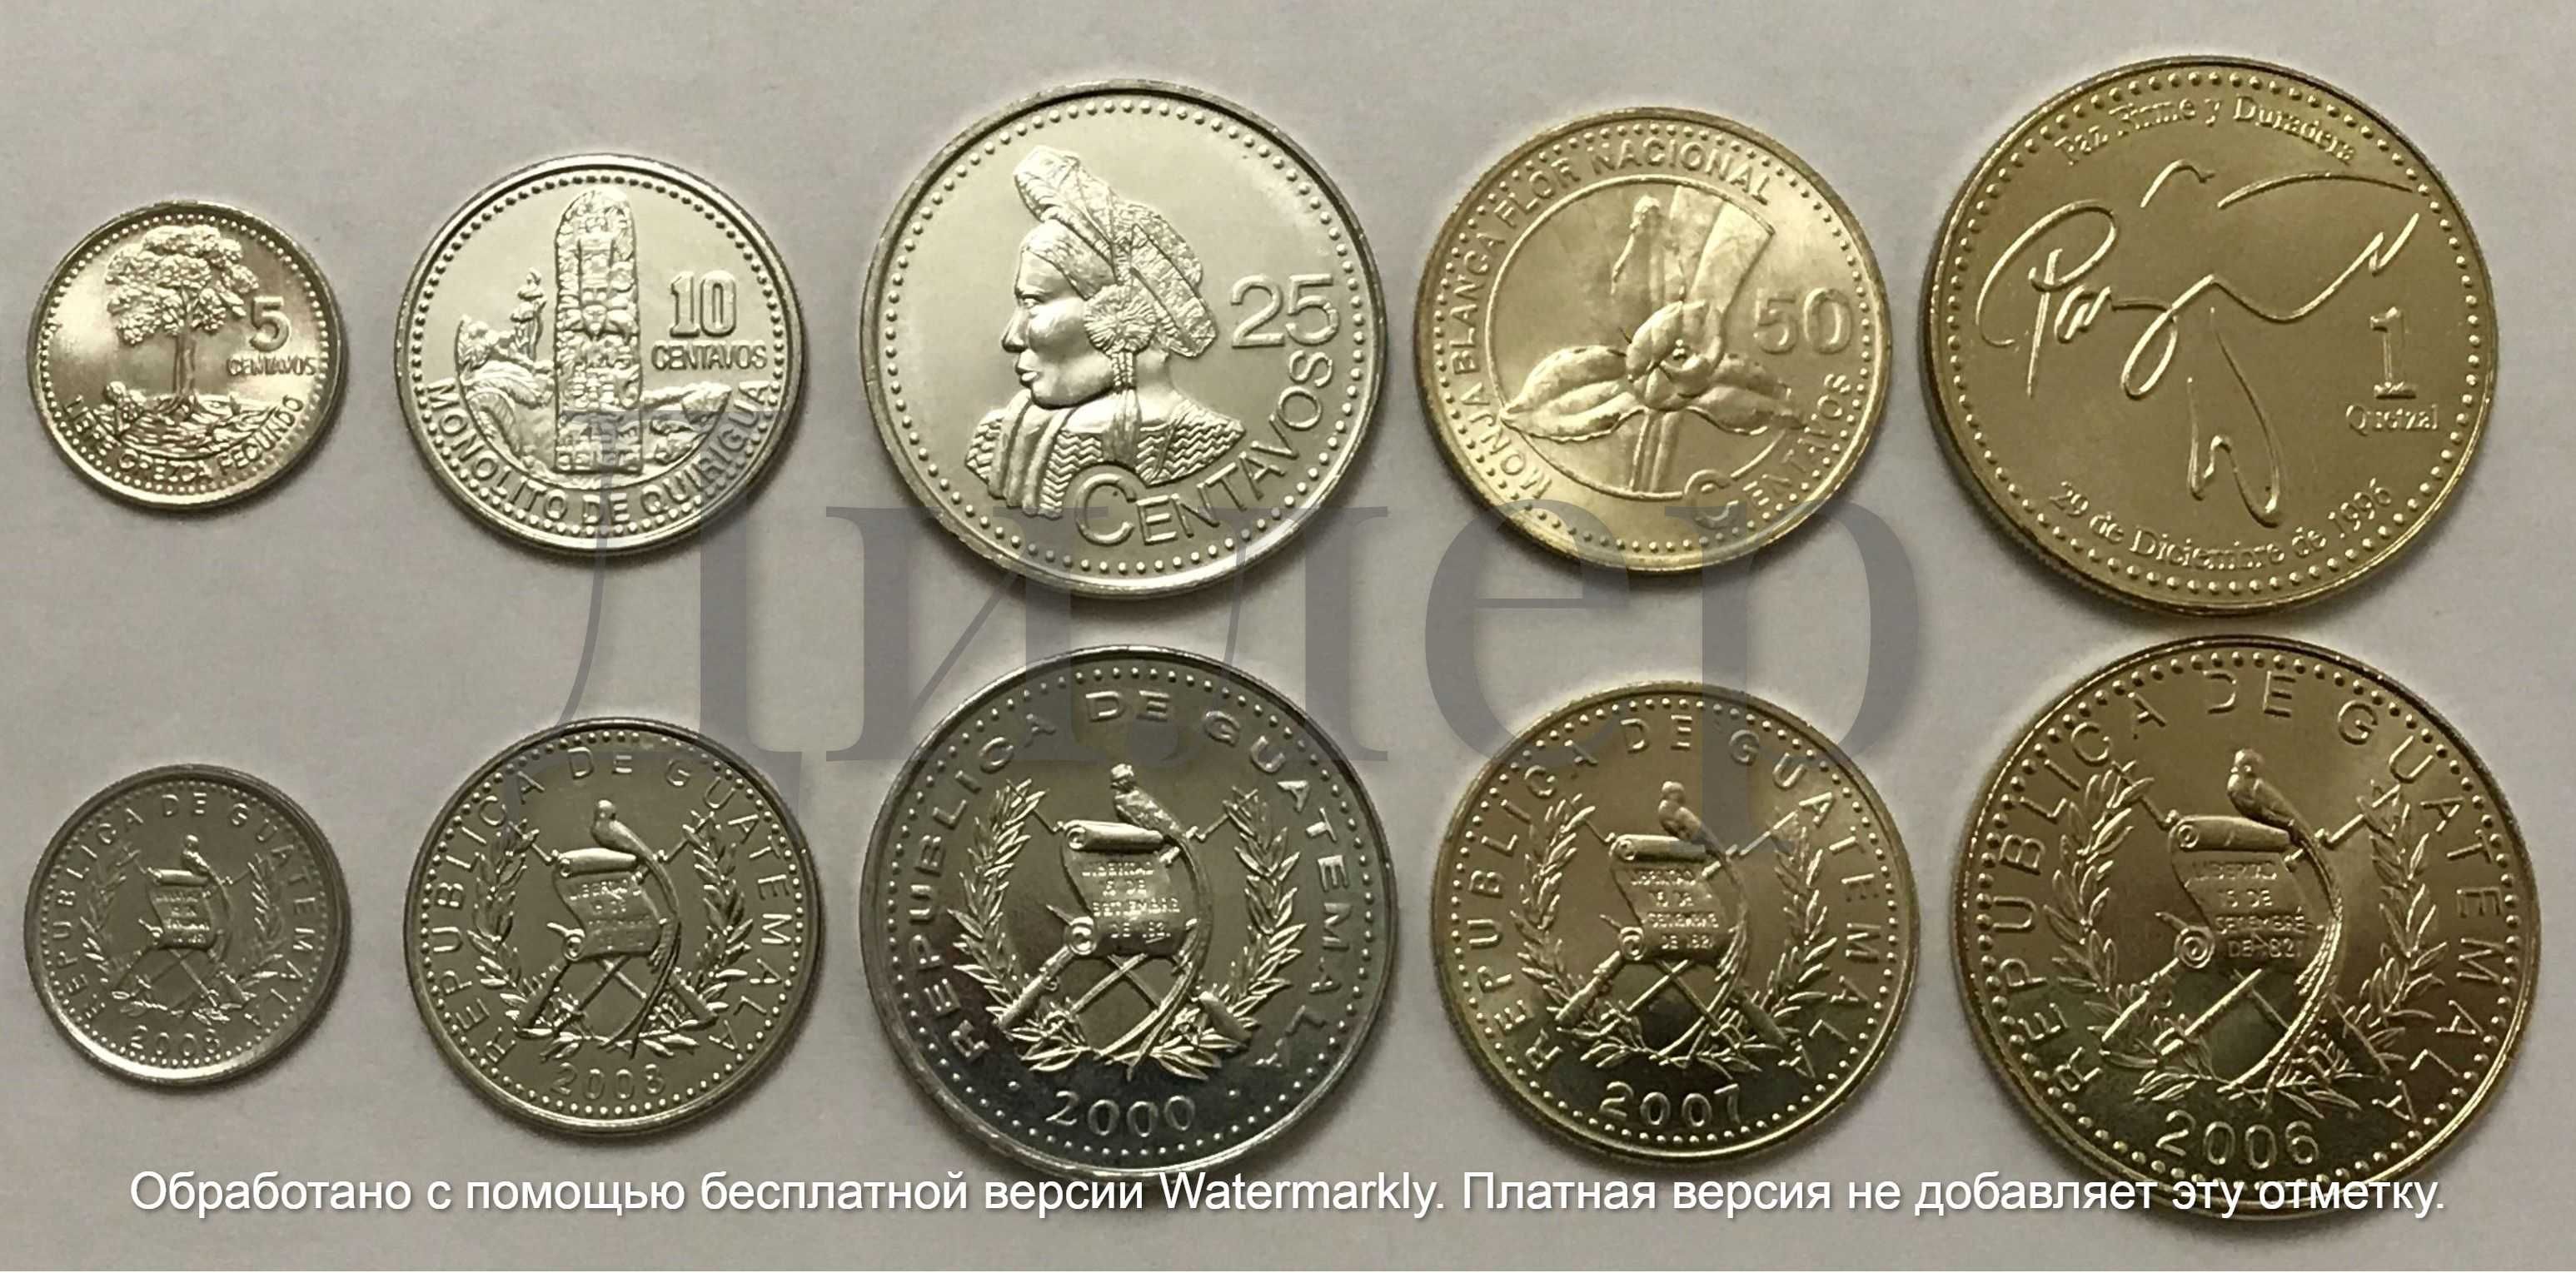 Наборы монет (Белиз, Гватемала, Сальвадор, Коста-Рика и др.) UNC